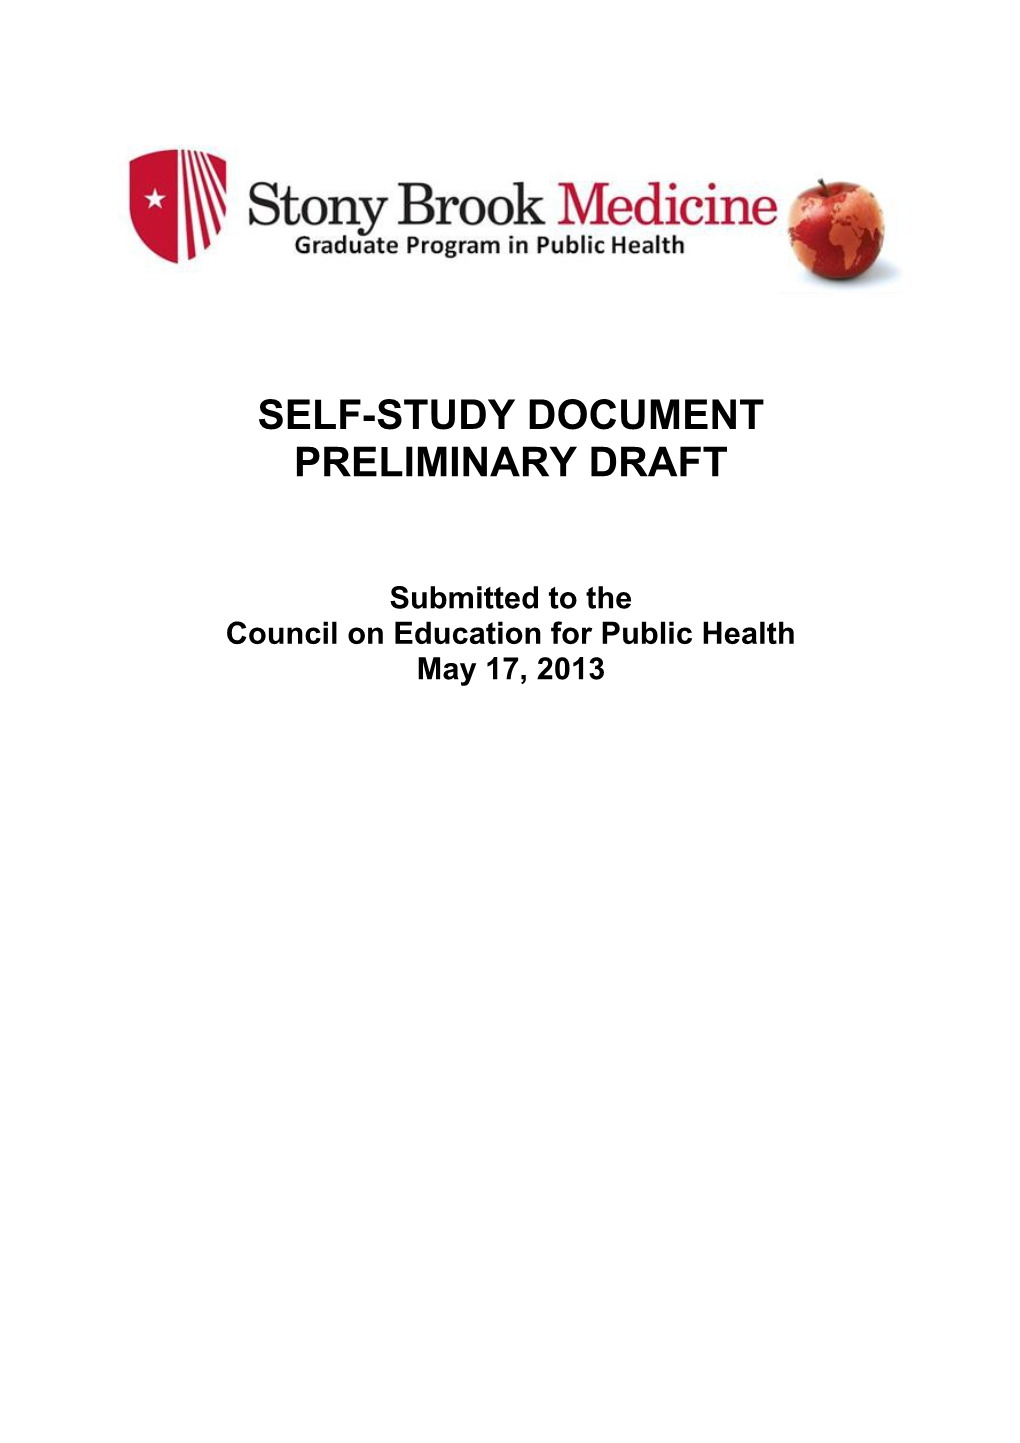 Self-Study Document